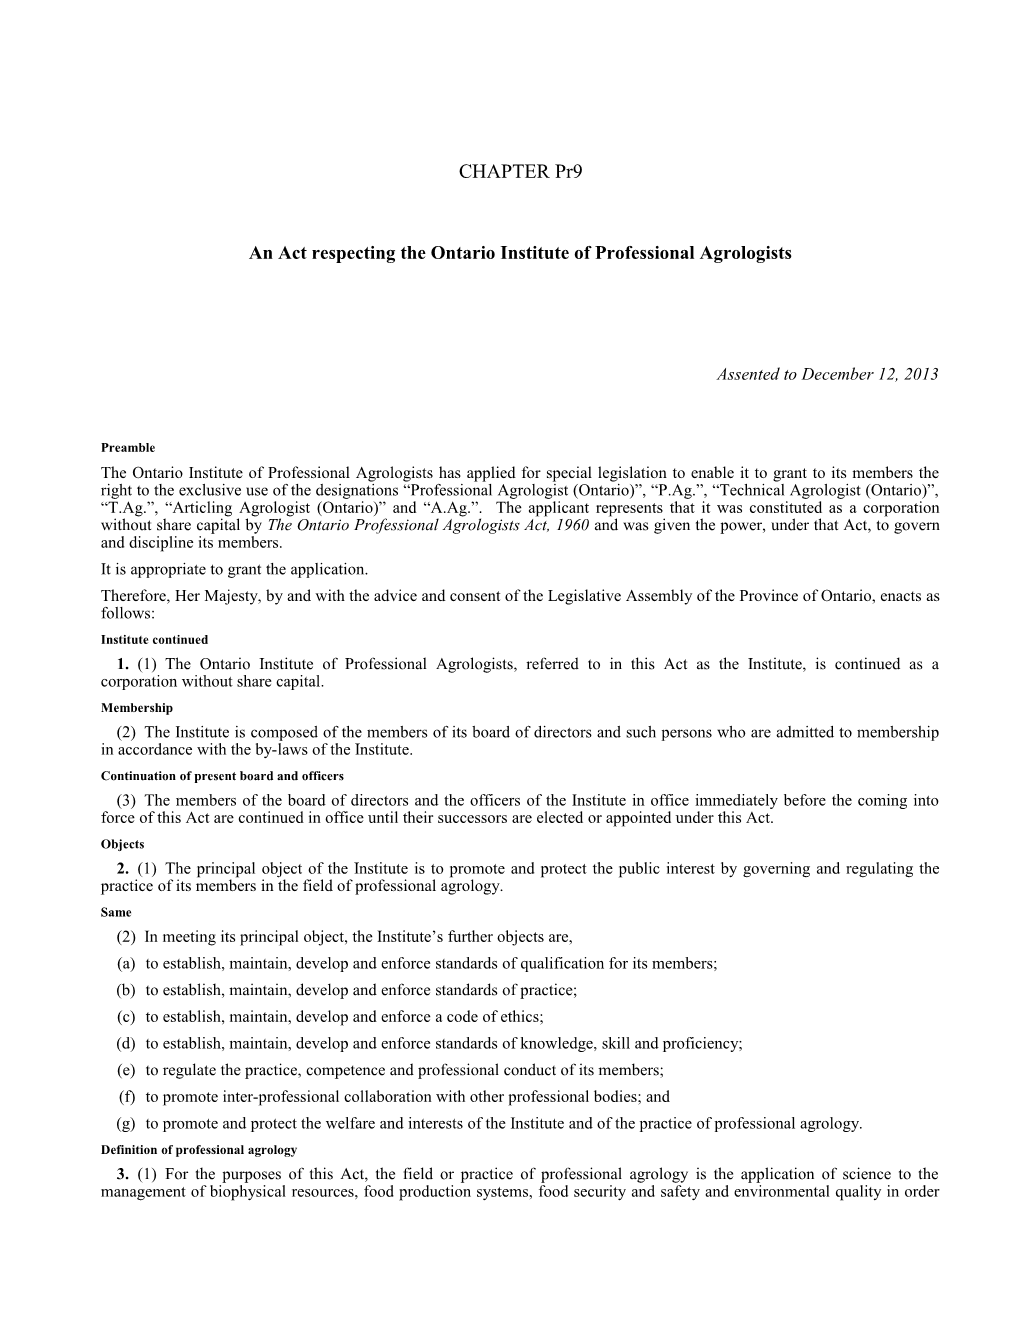 Ontario Institute of Professional Agrologists Act, 2013, S.O. 2013, C. Pr9 - Bill Pr15